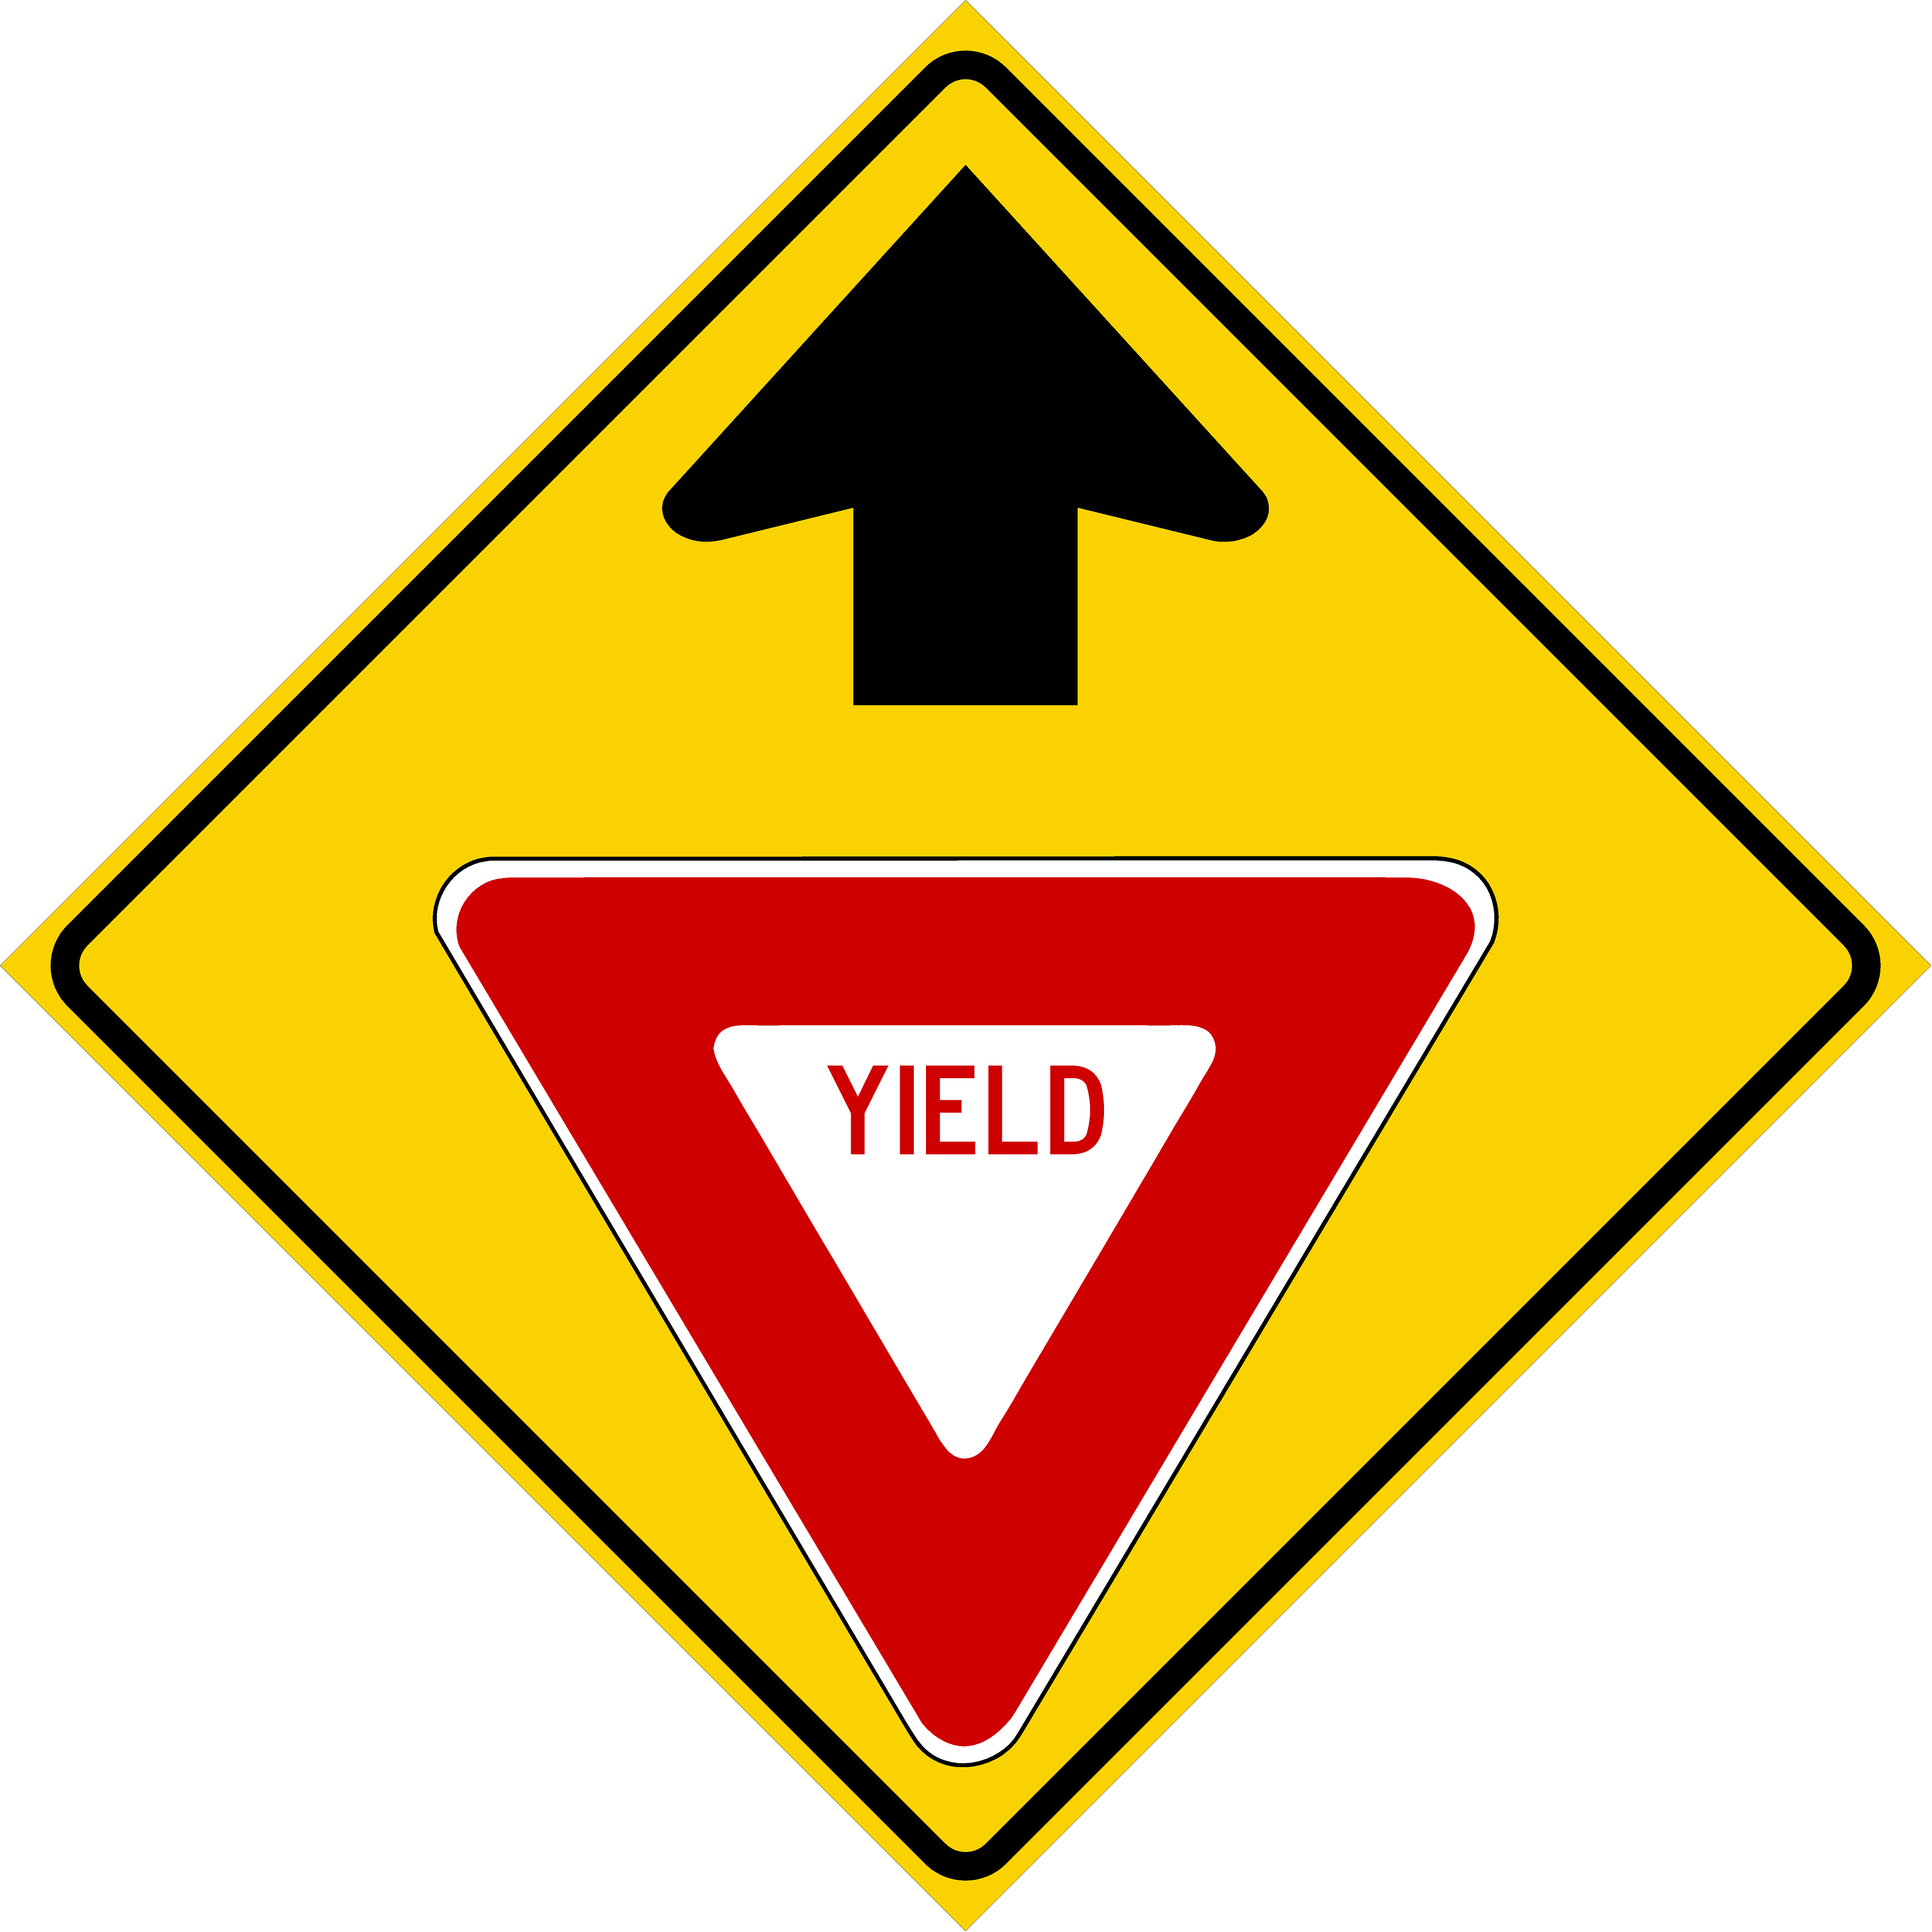 Yield Ahead (W3-2)